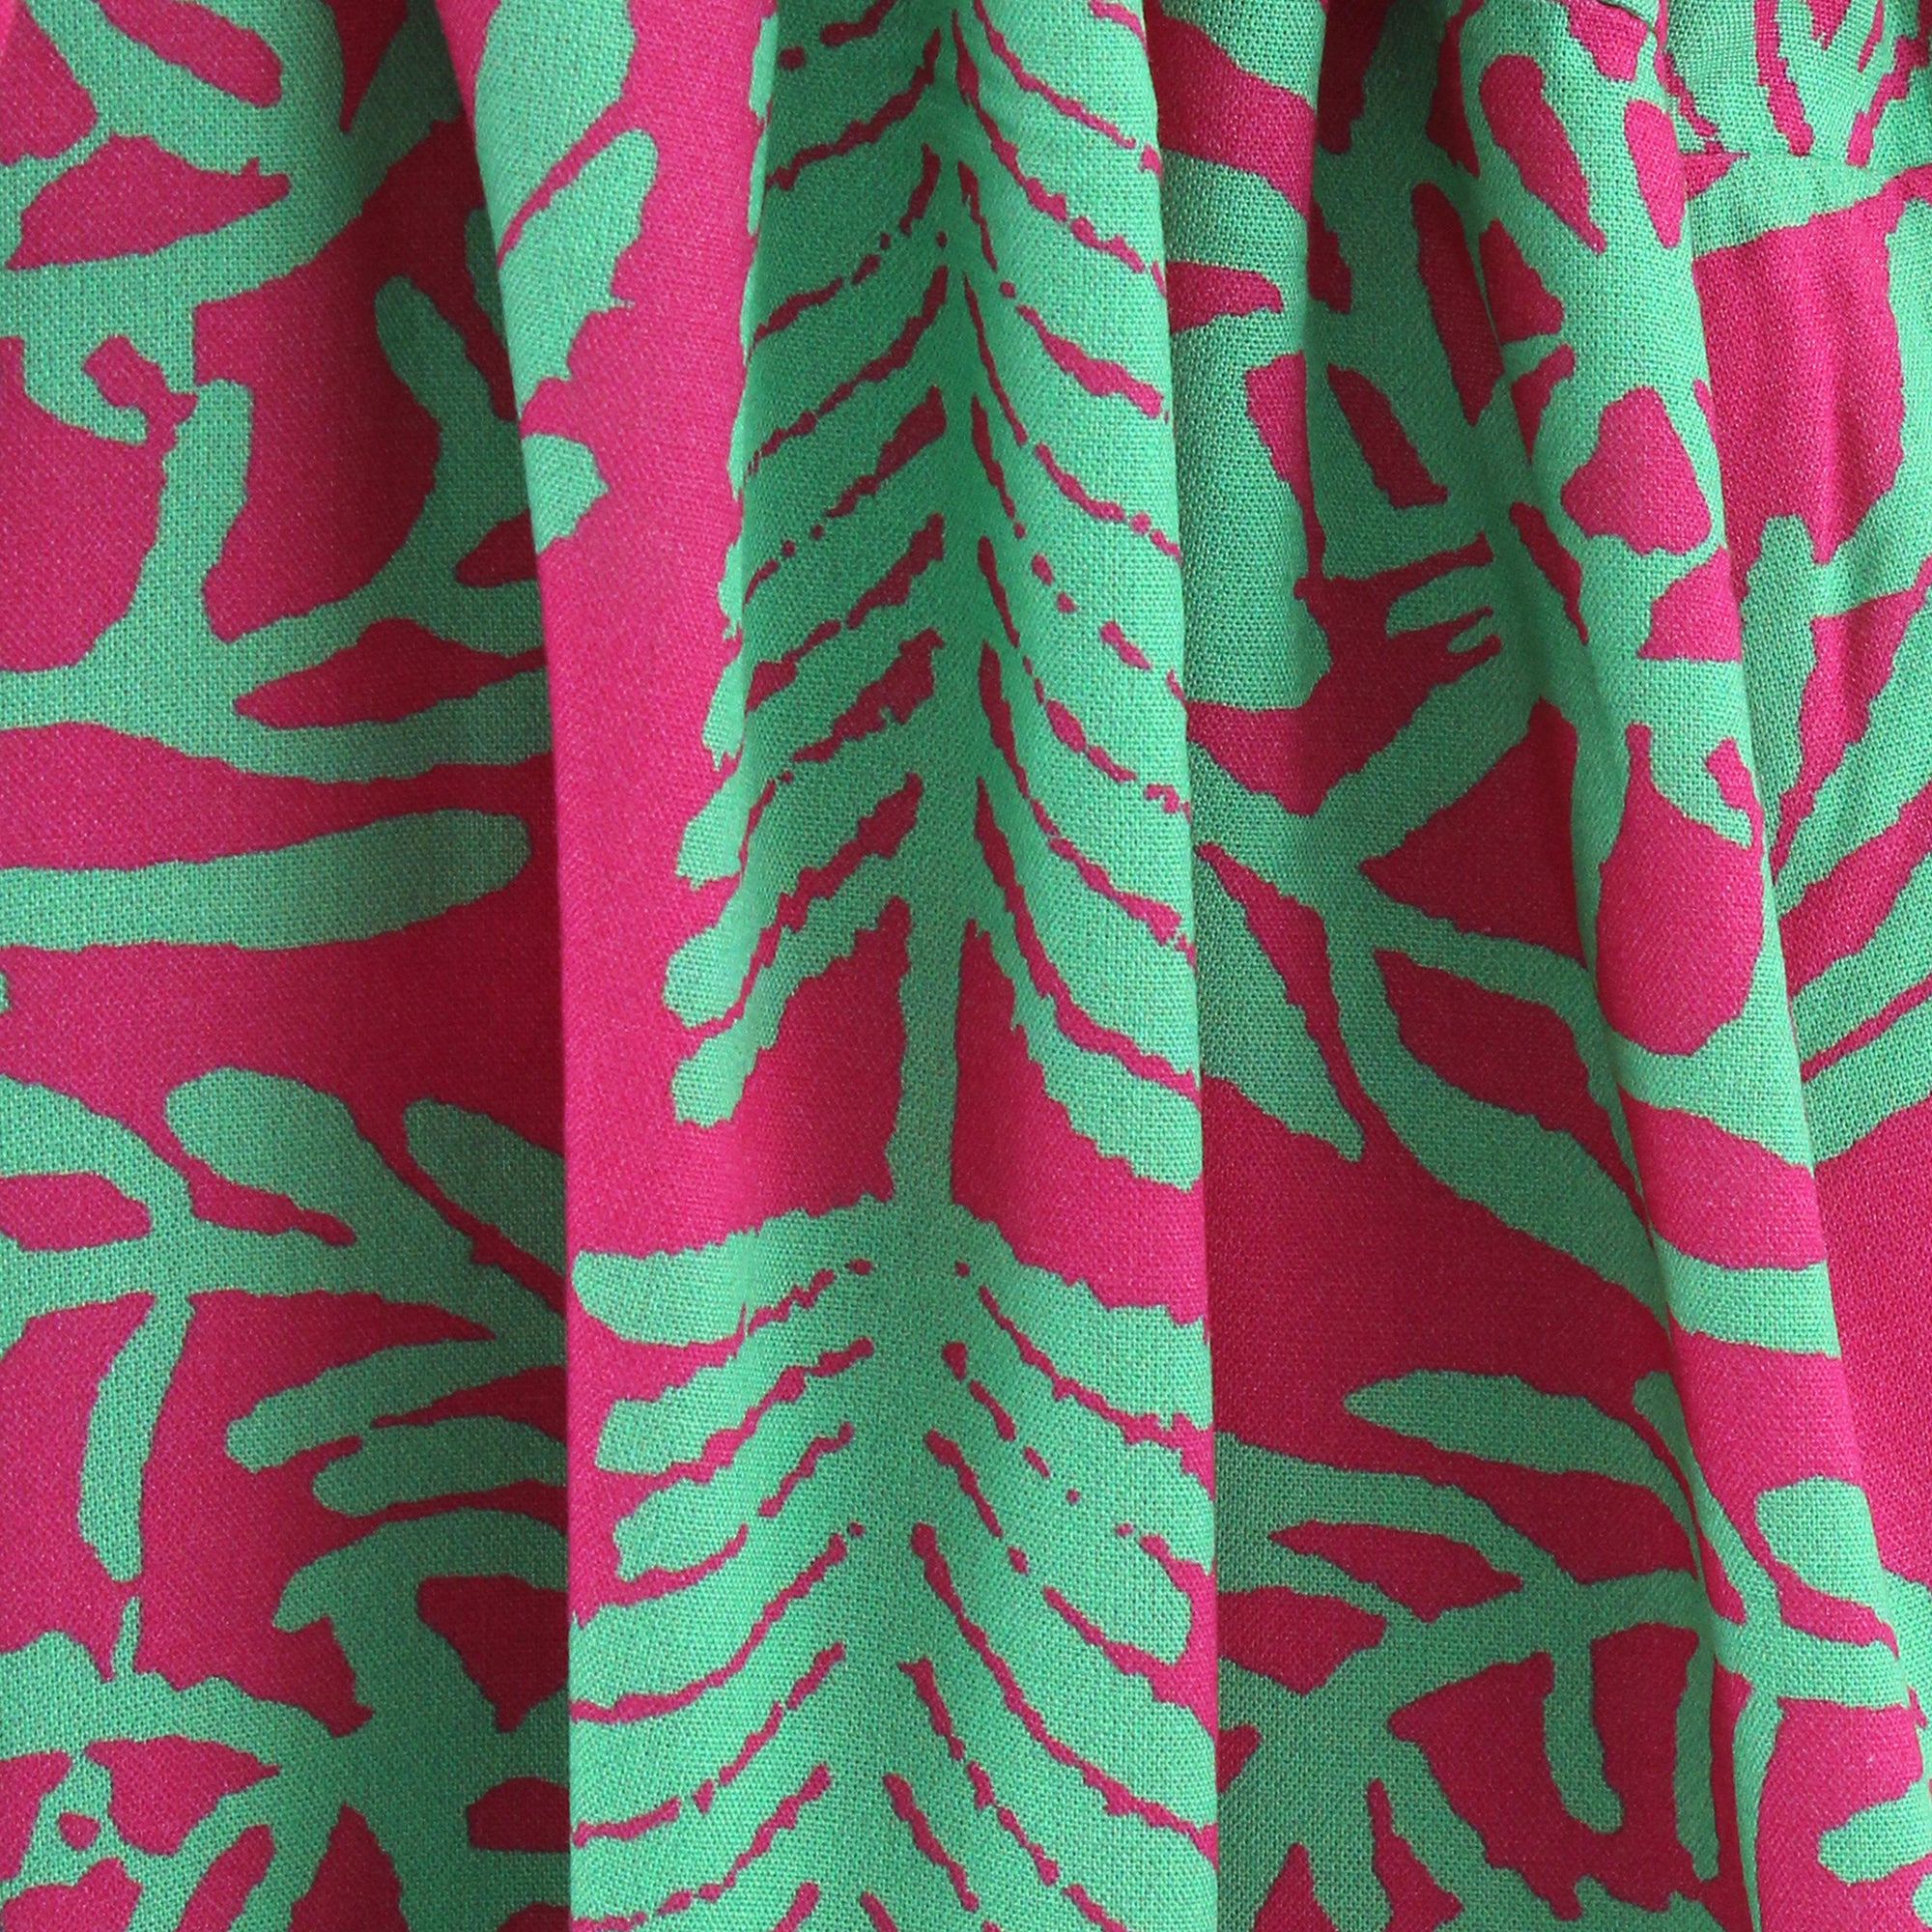 Pink/Green lris Tie Front Dress